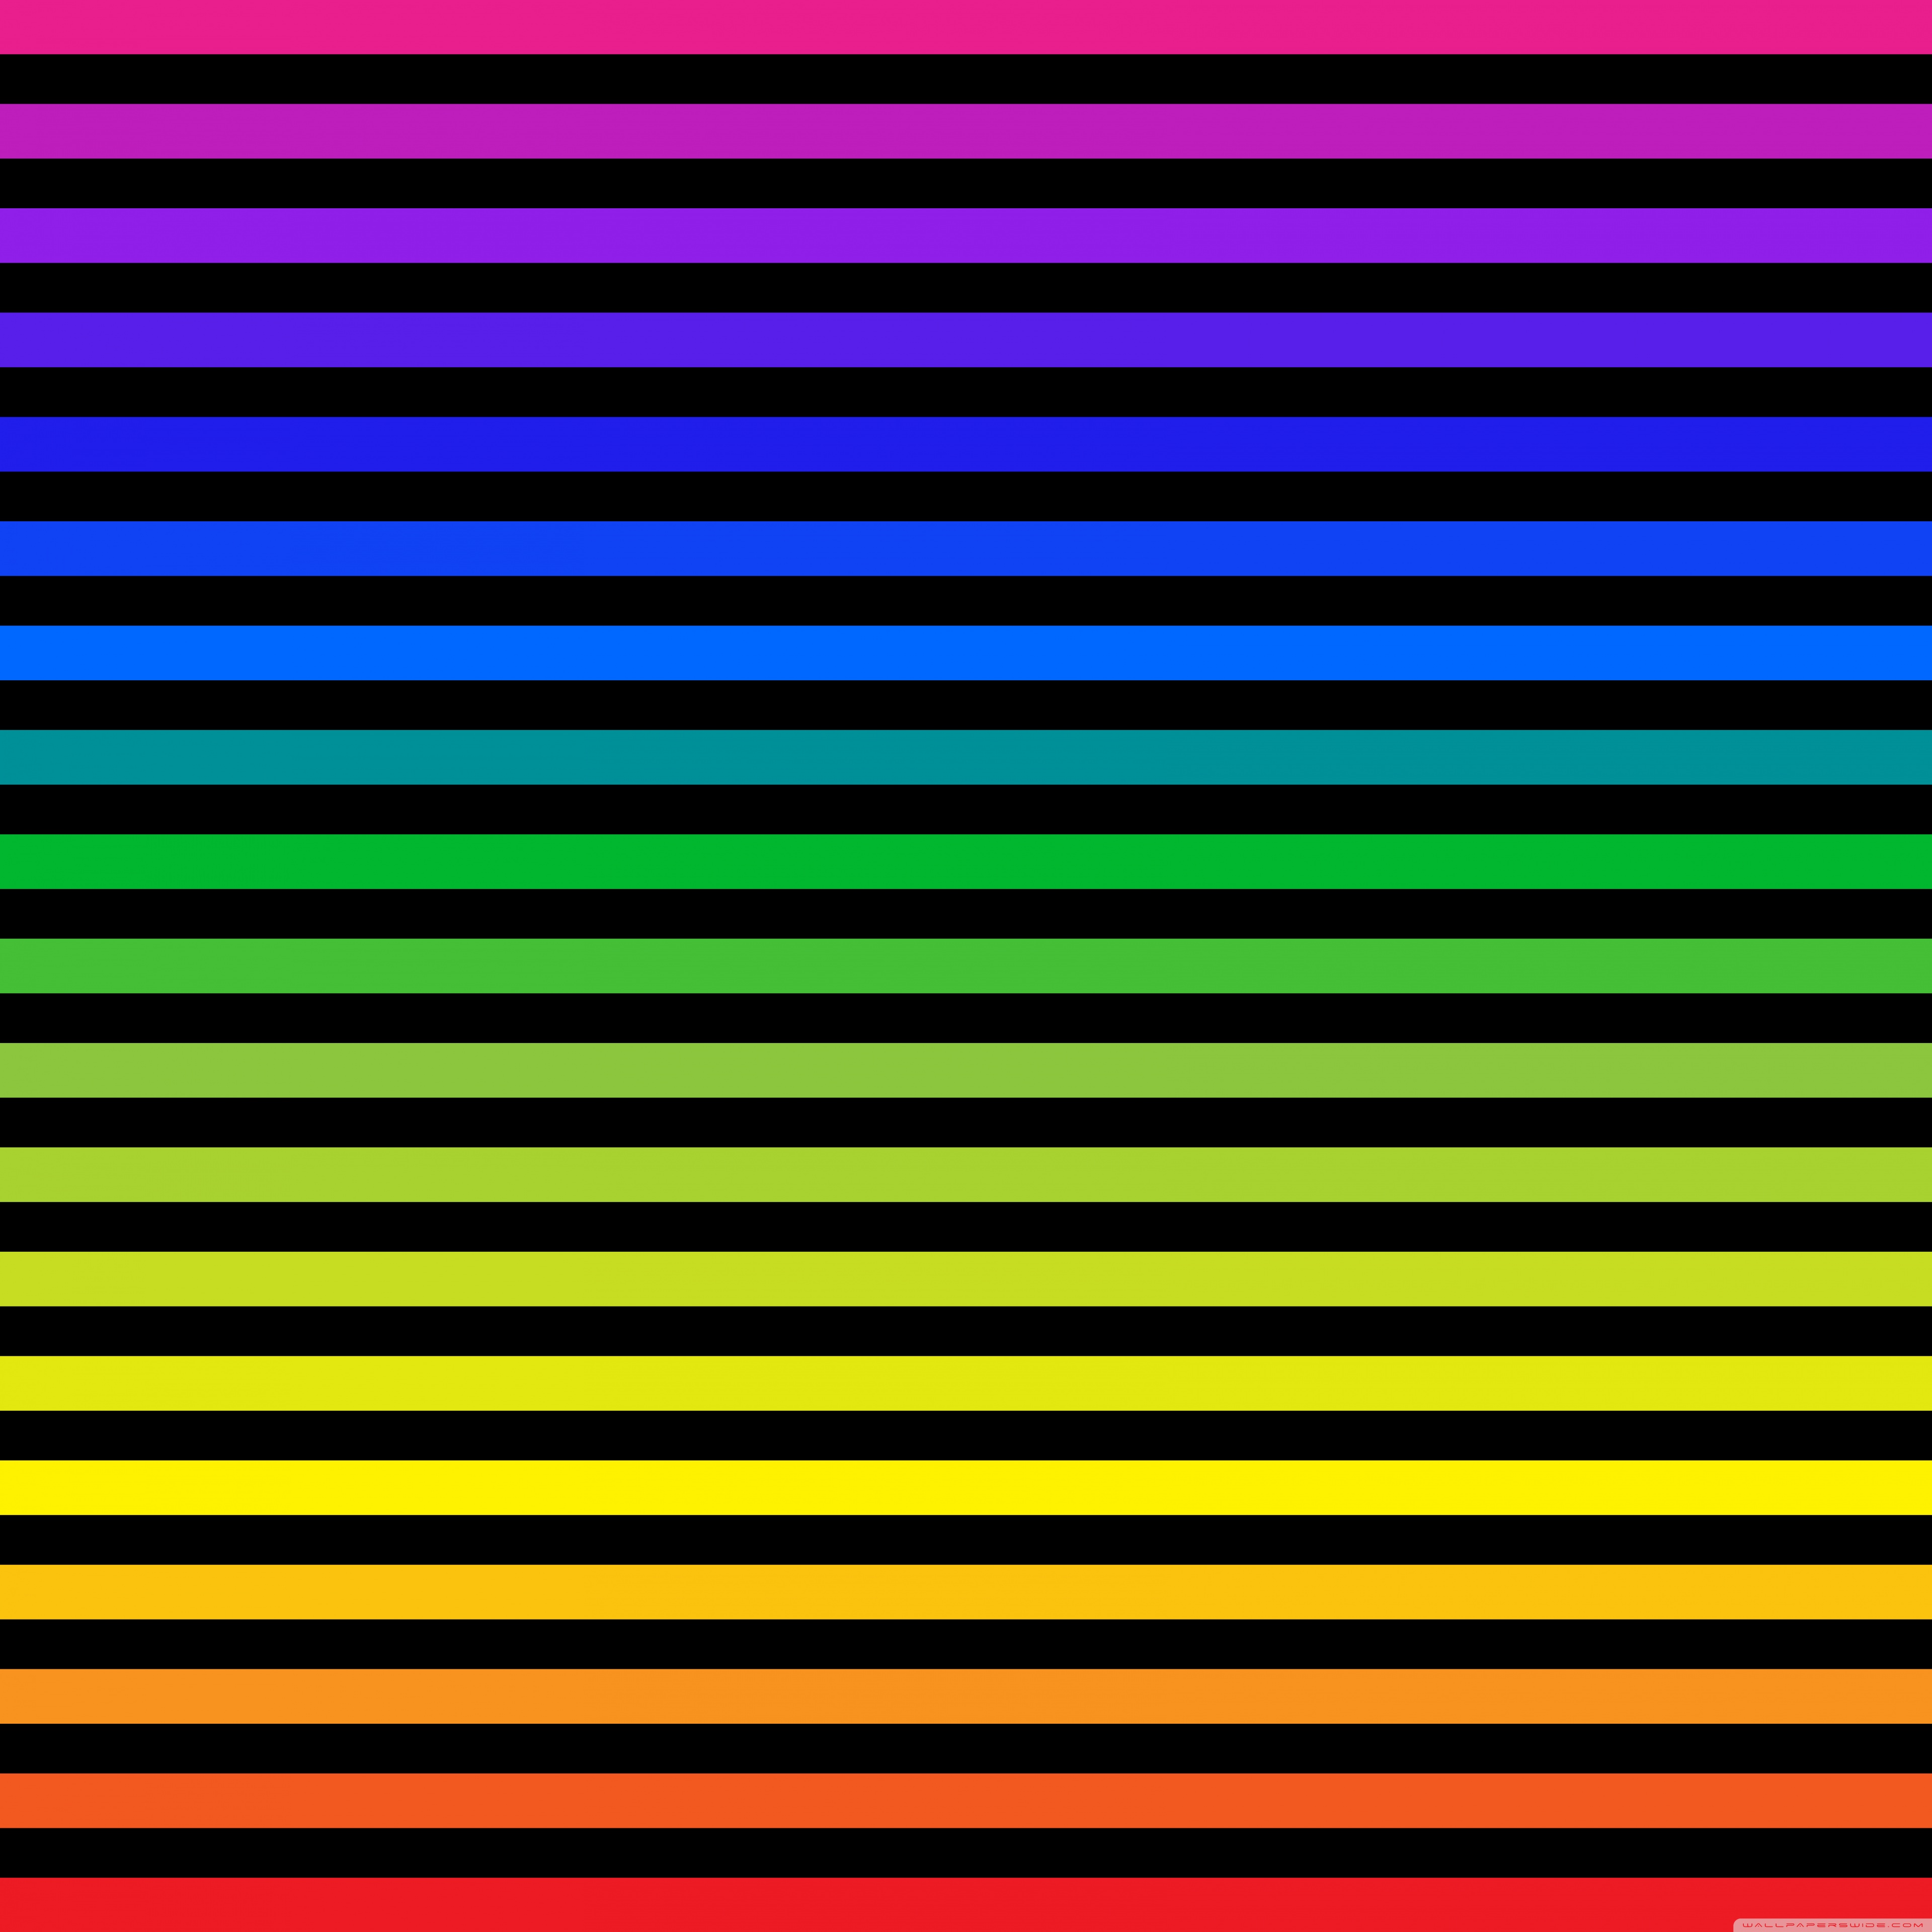 Rainbow 4K Lines Wallpapers